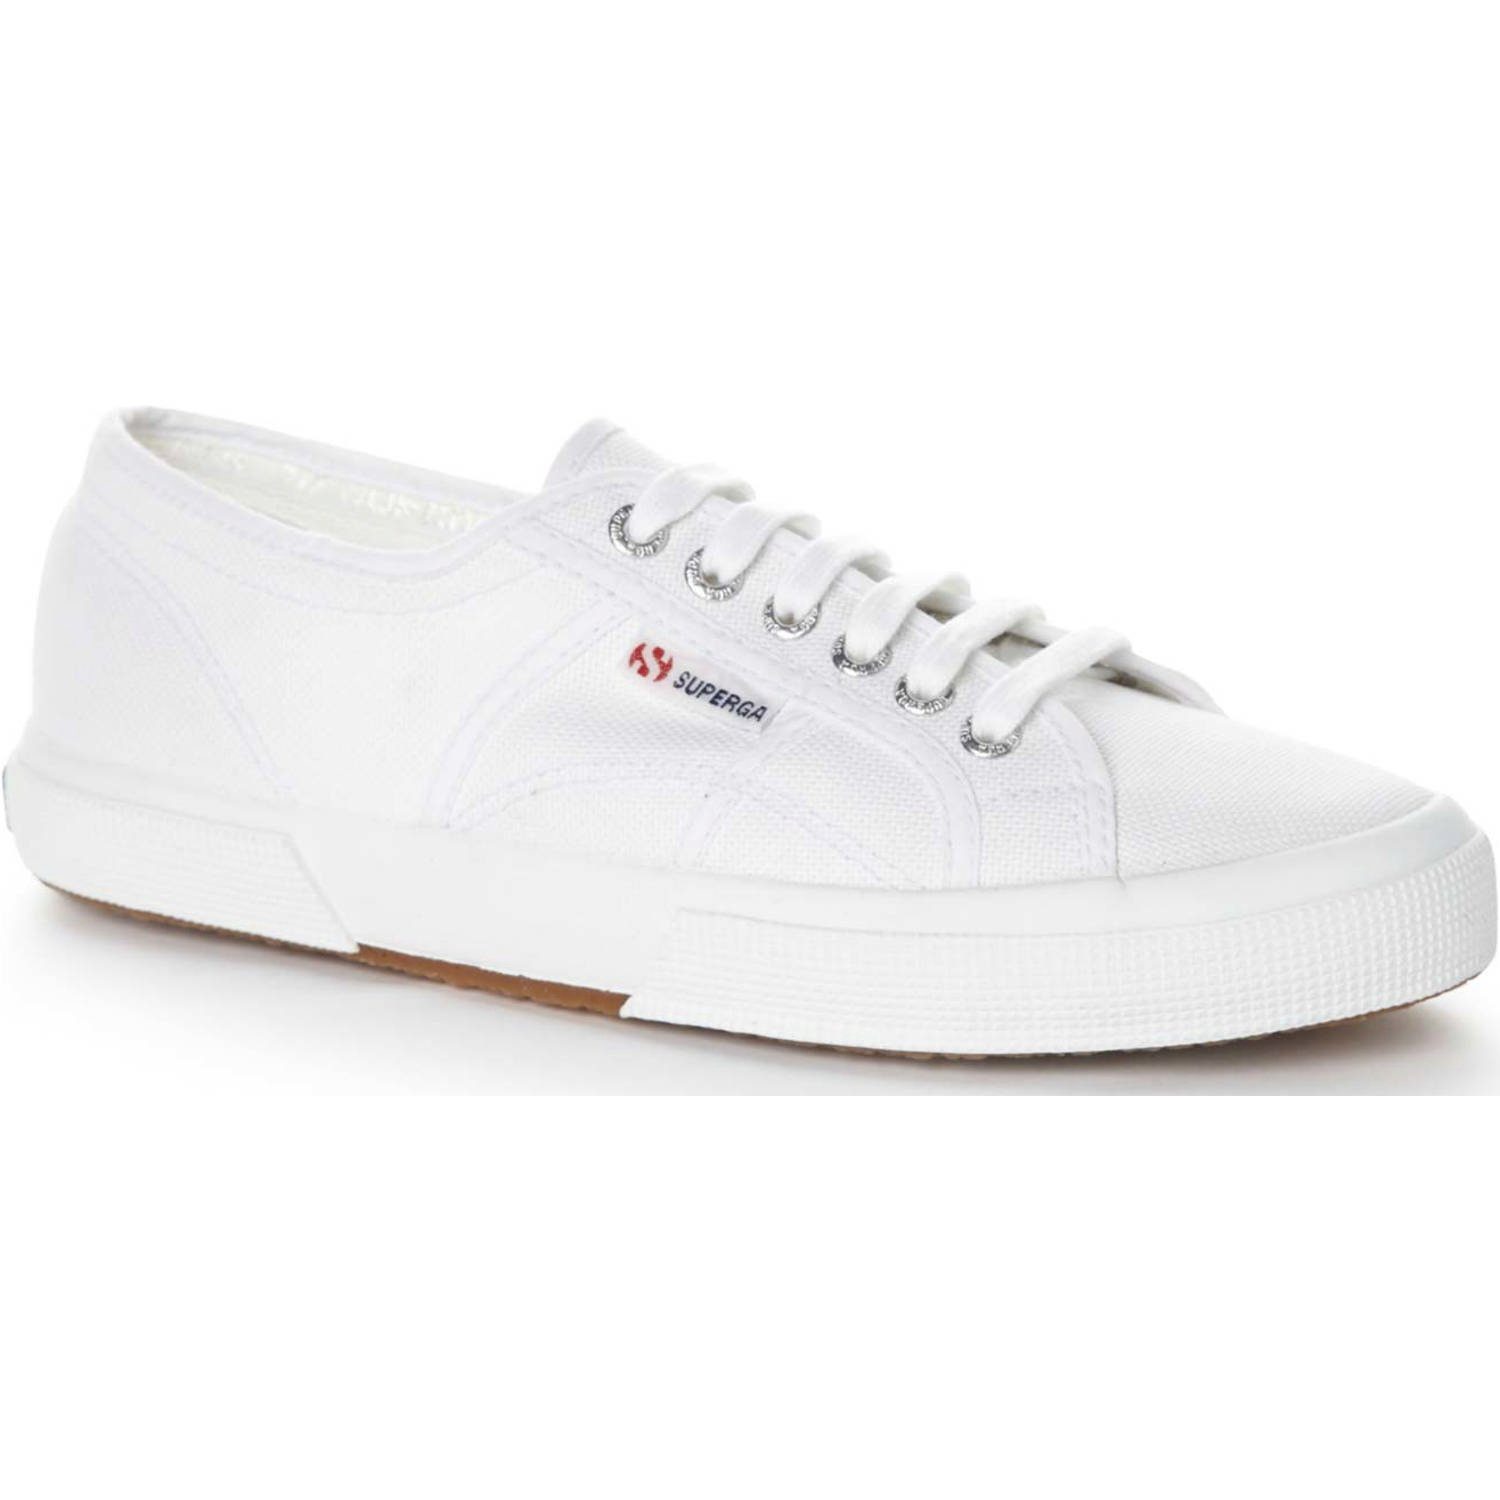 Superga Superga 2750 Cotu Classic S000010 Sneaker white (19801003)